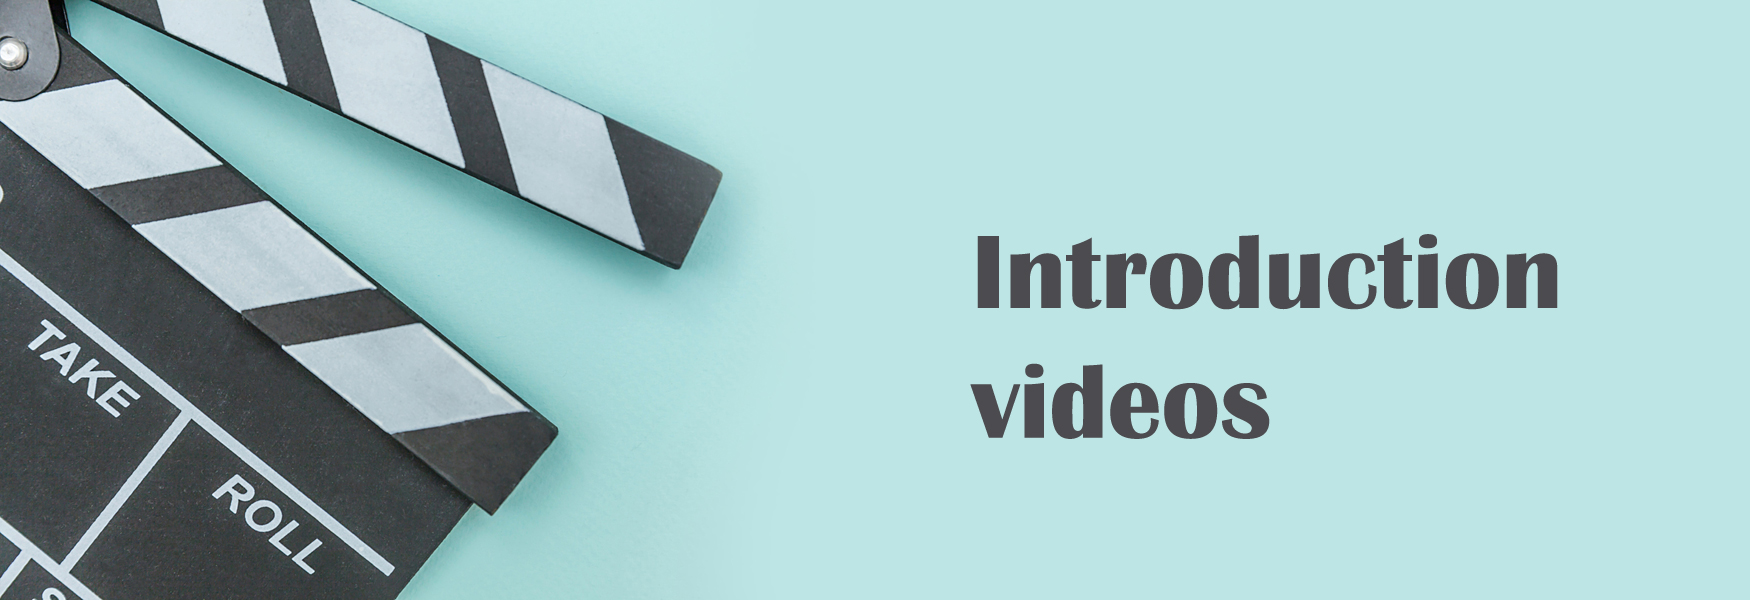 Introduction videos to pForecast